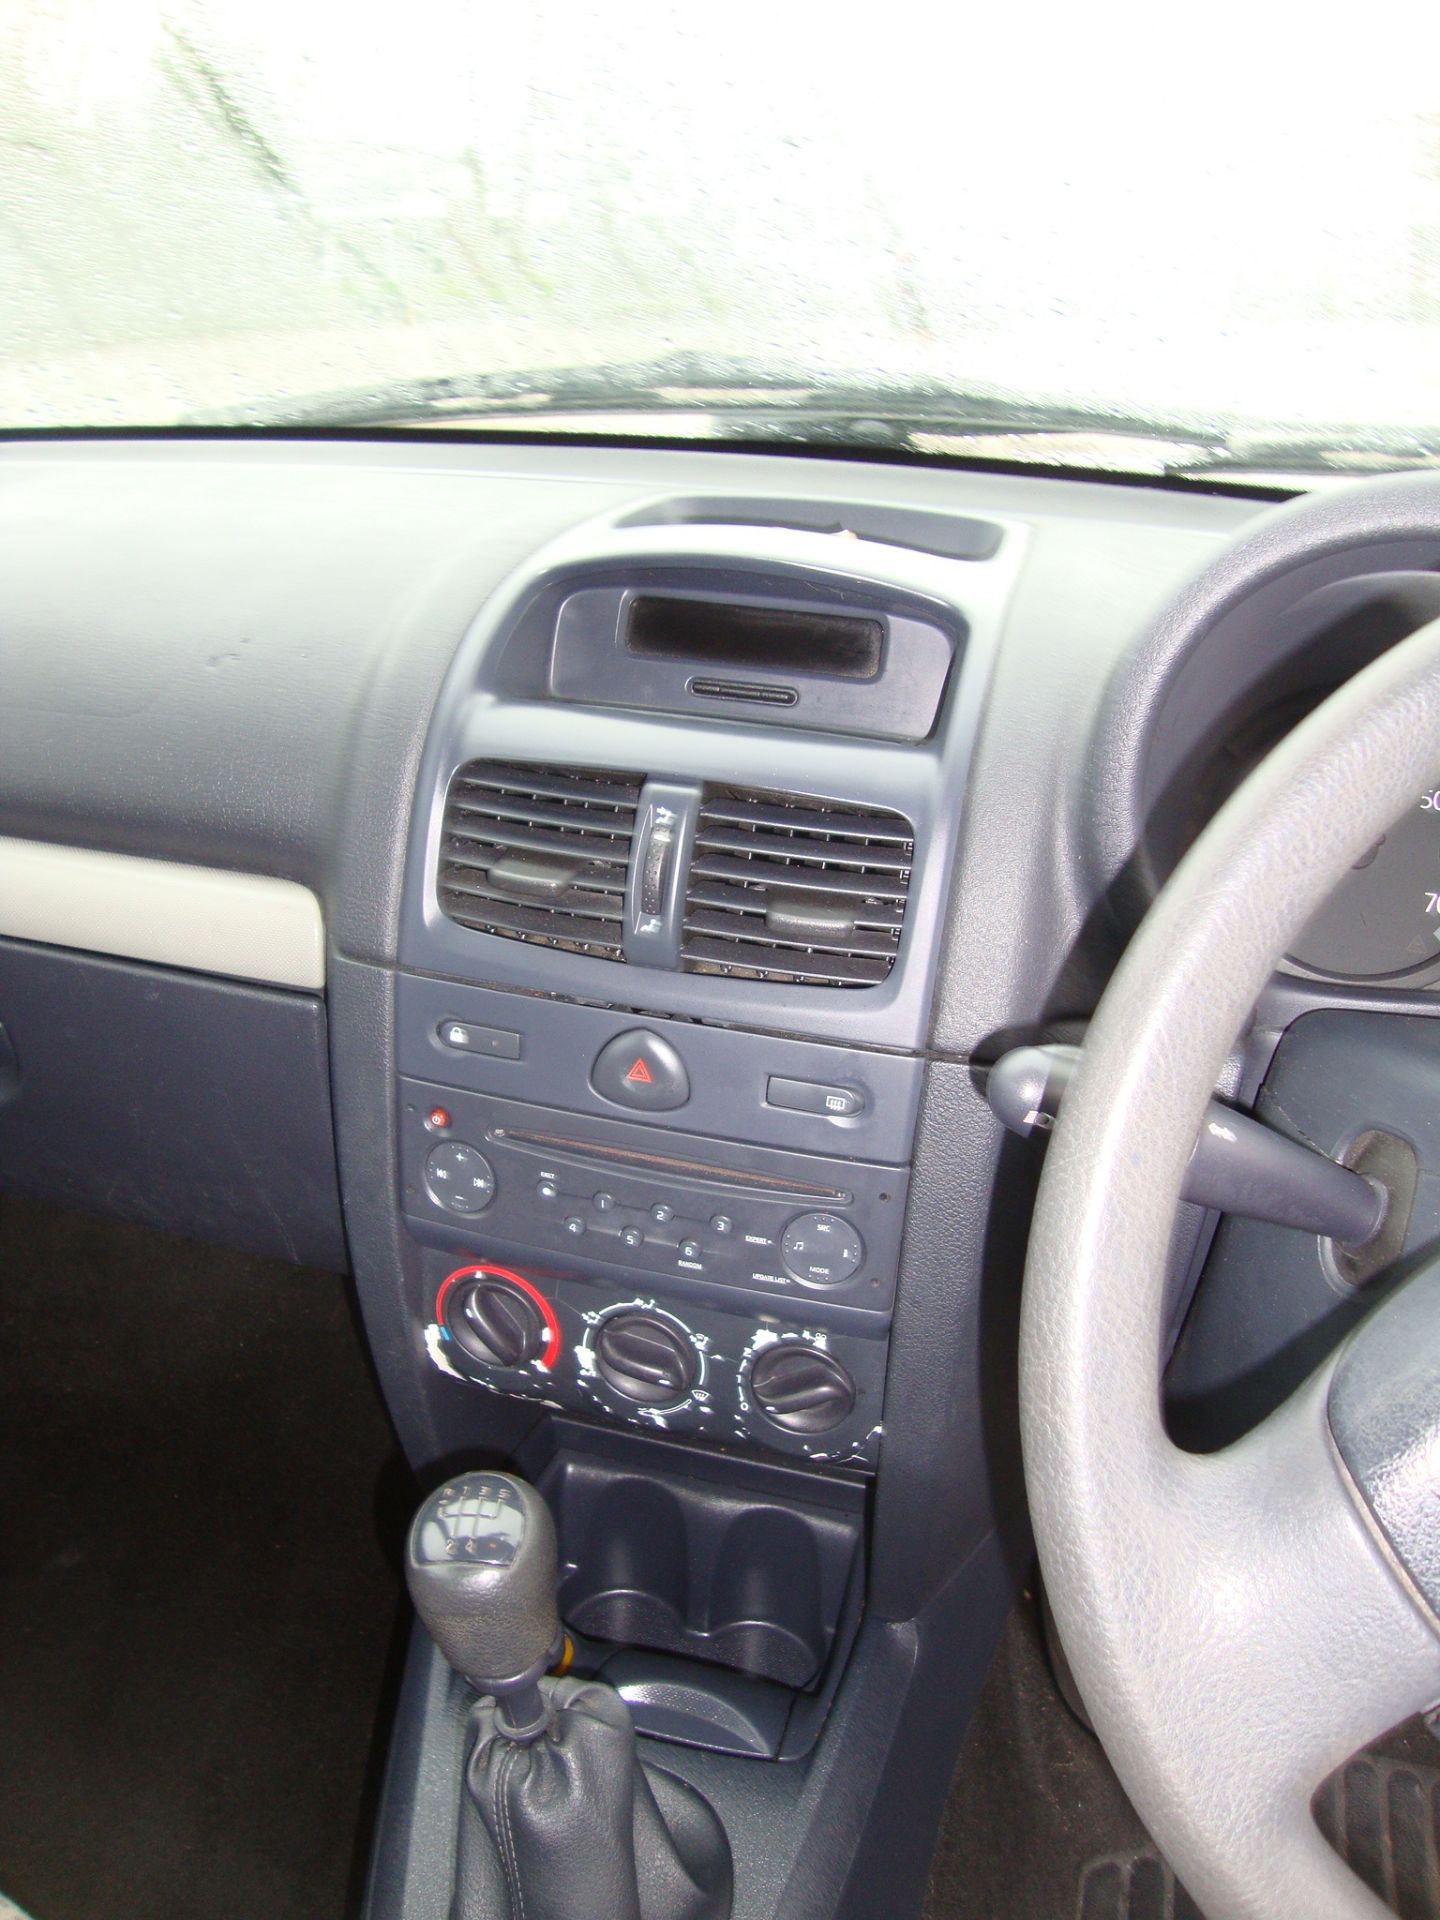 DG06 VYR Renault Clio Campus 3-door hatchback - Image 8 of 11